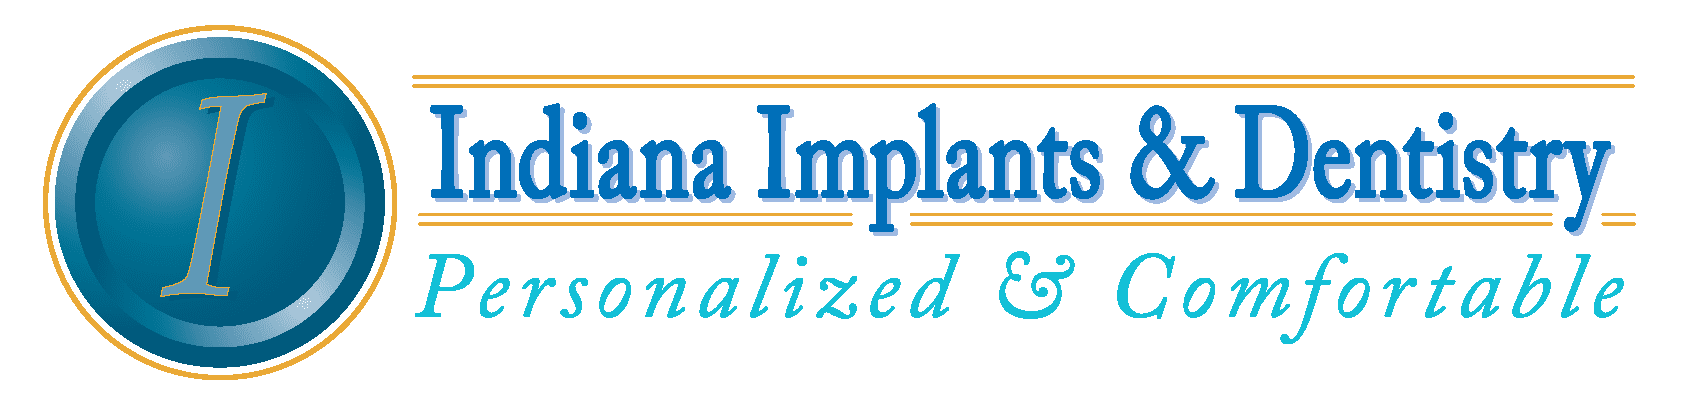 Indiana Implants & Dentistry